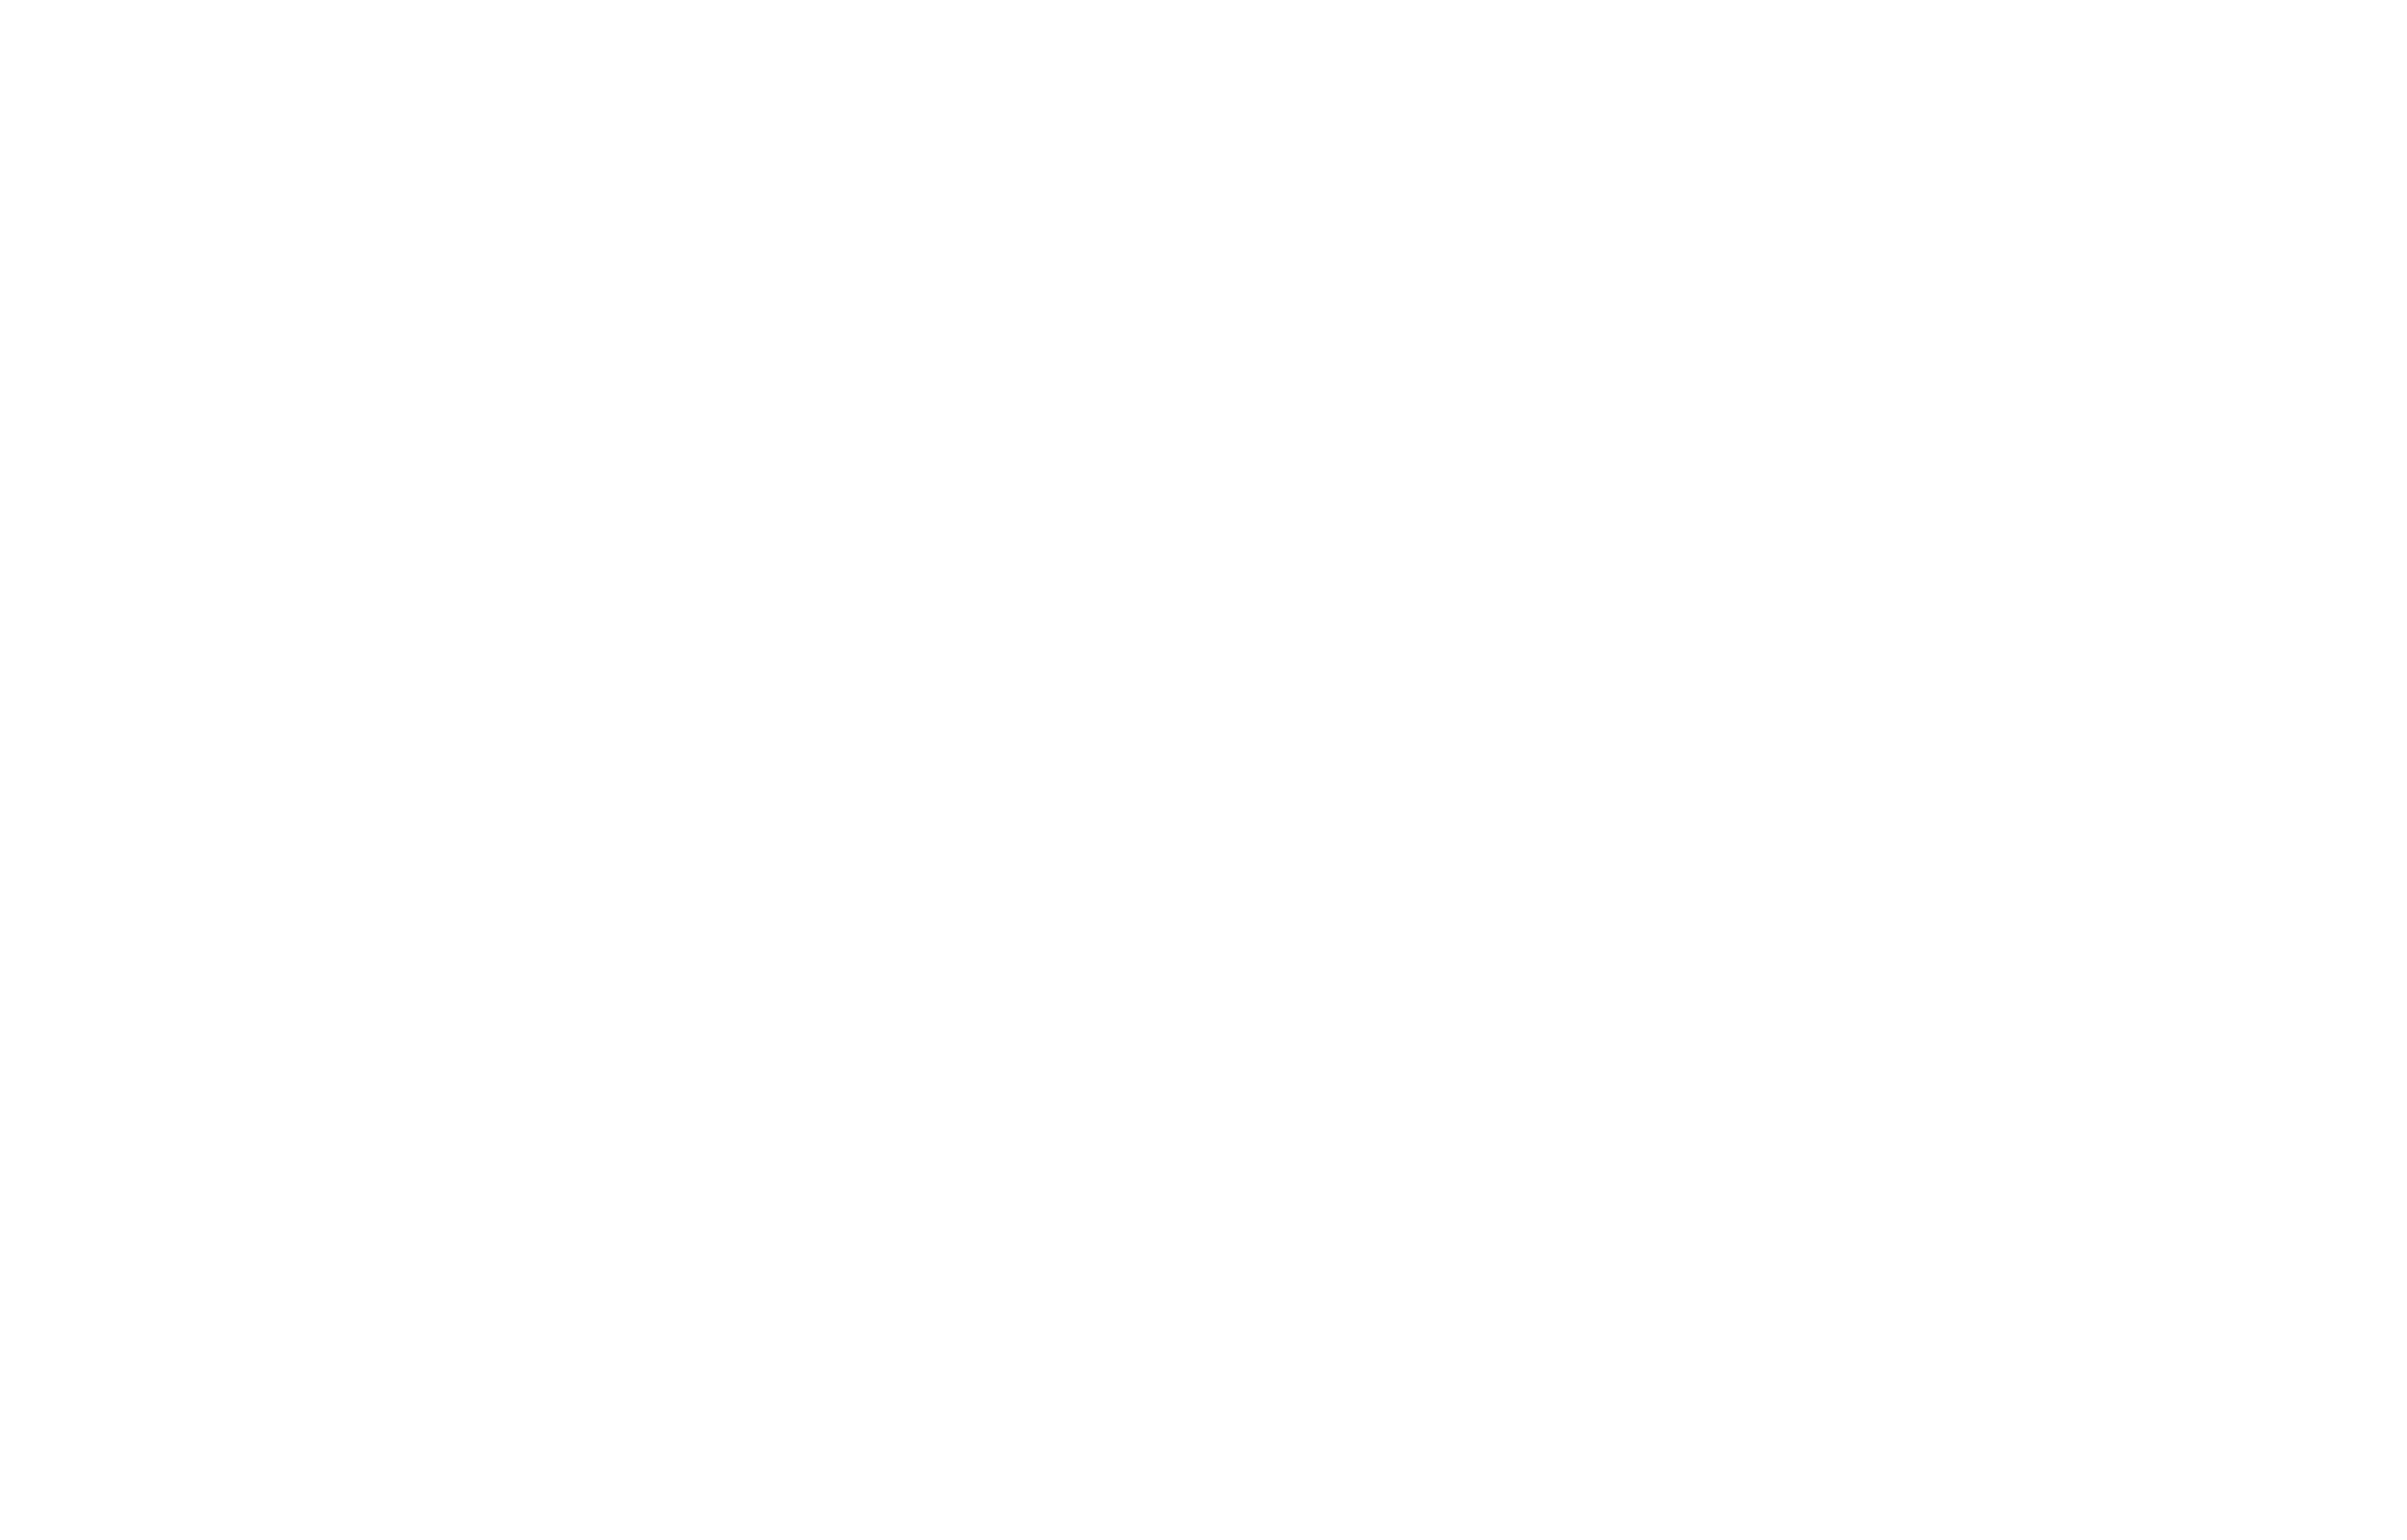 Martin Guitar Brooke Ligertwood Signature Edition